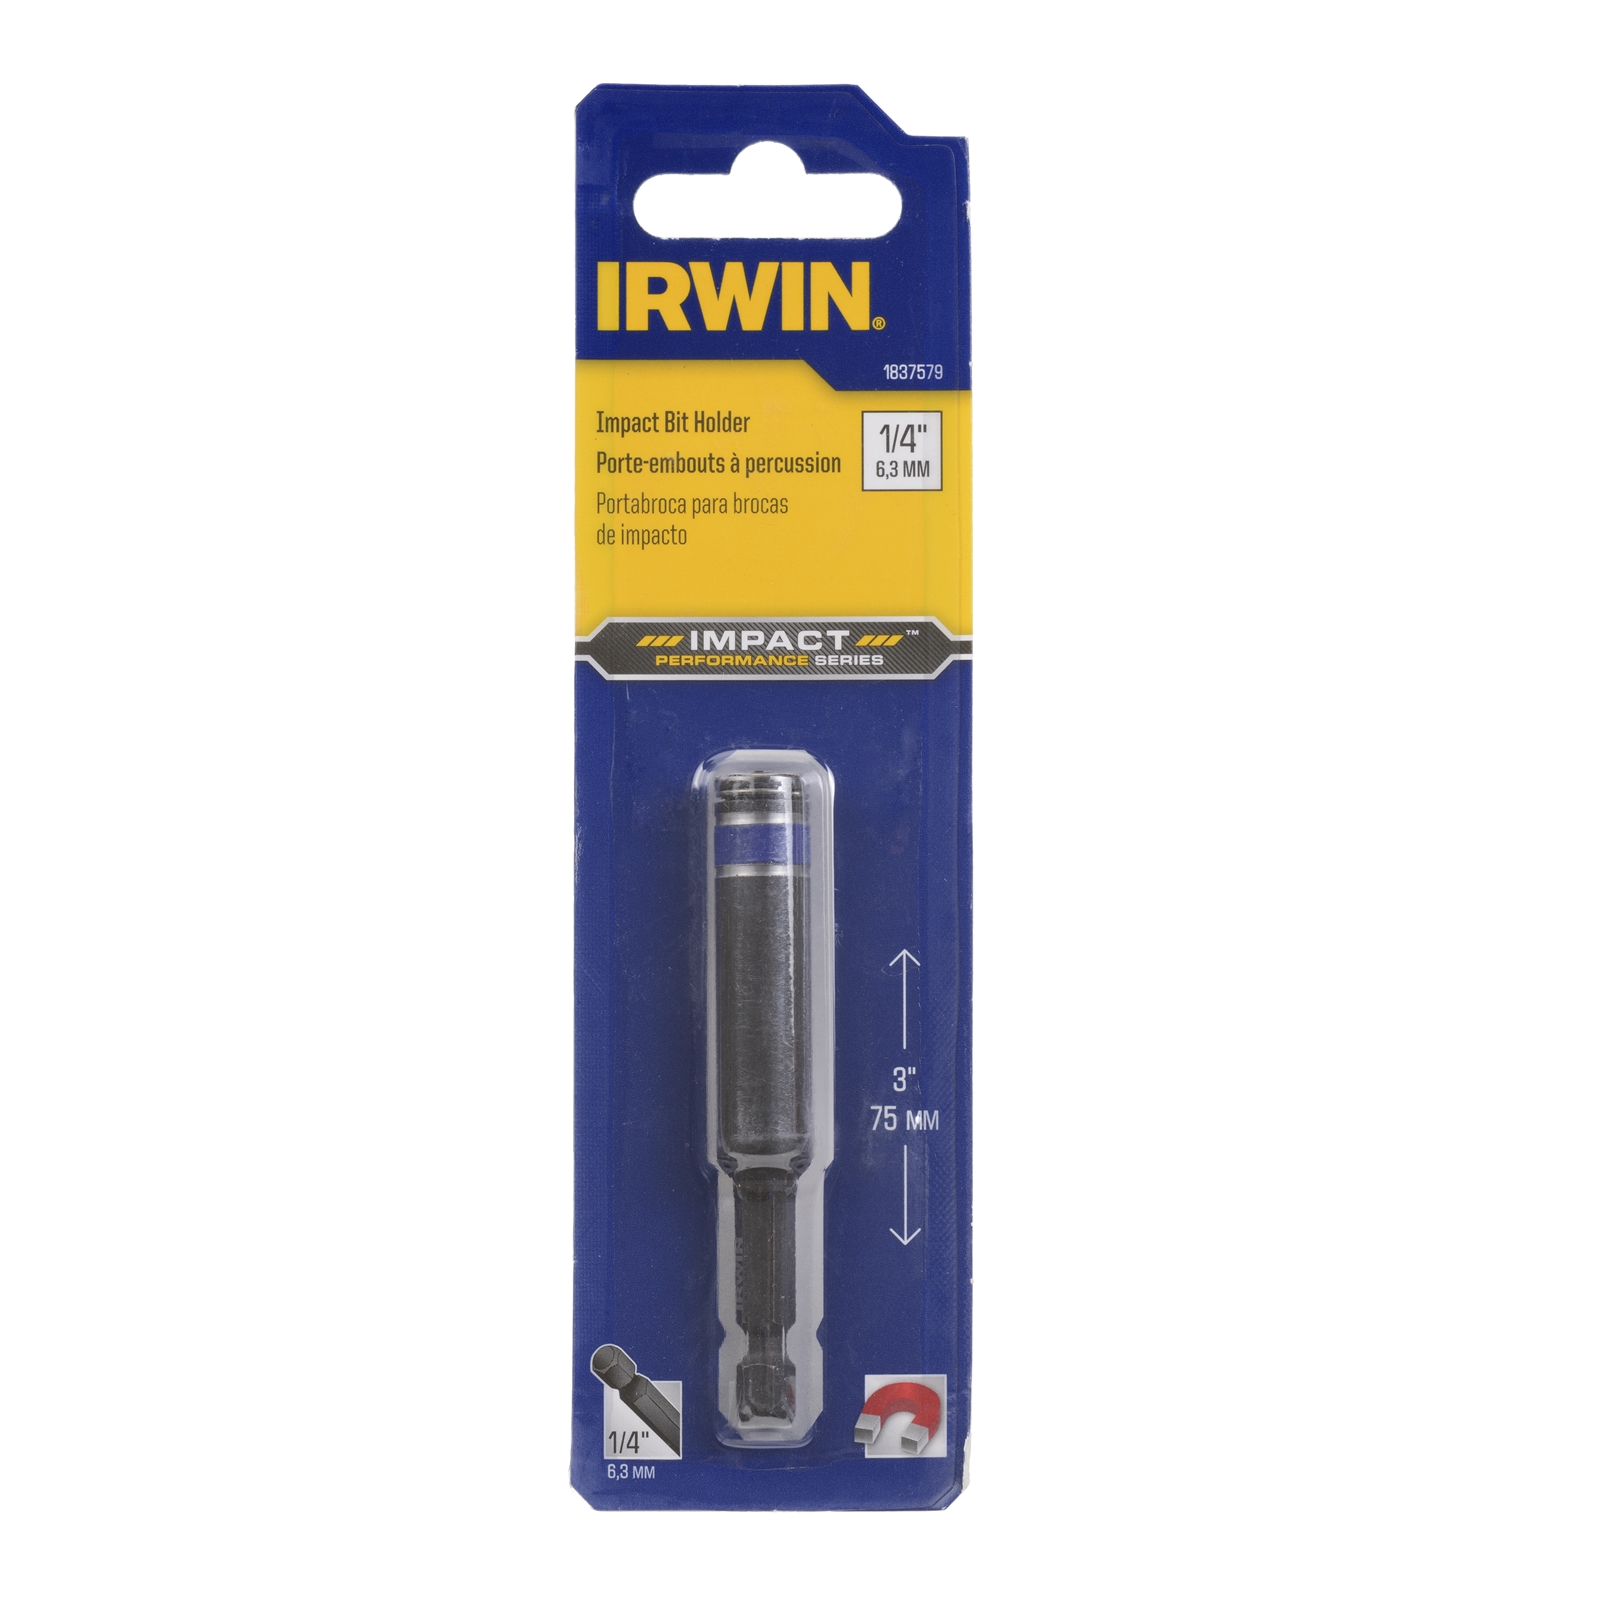 Irwin 76mm C-ring Impact Screwdriver Bit